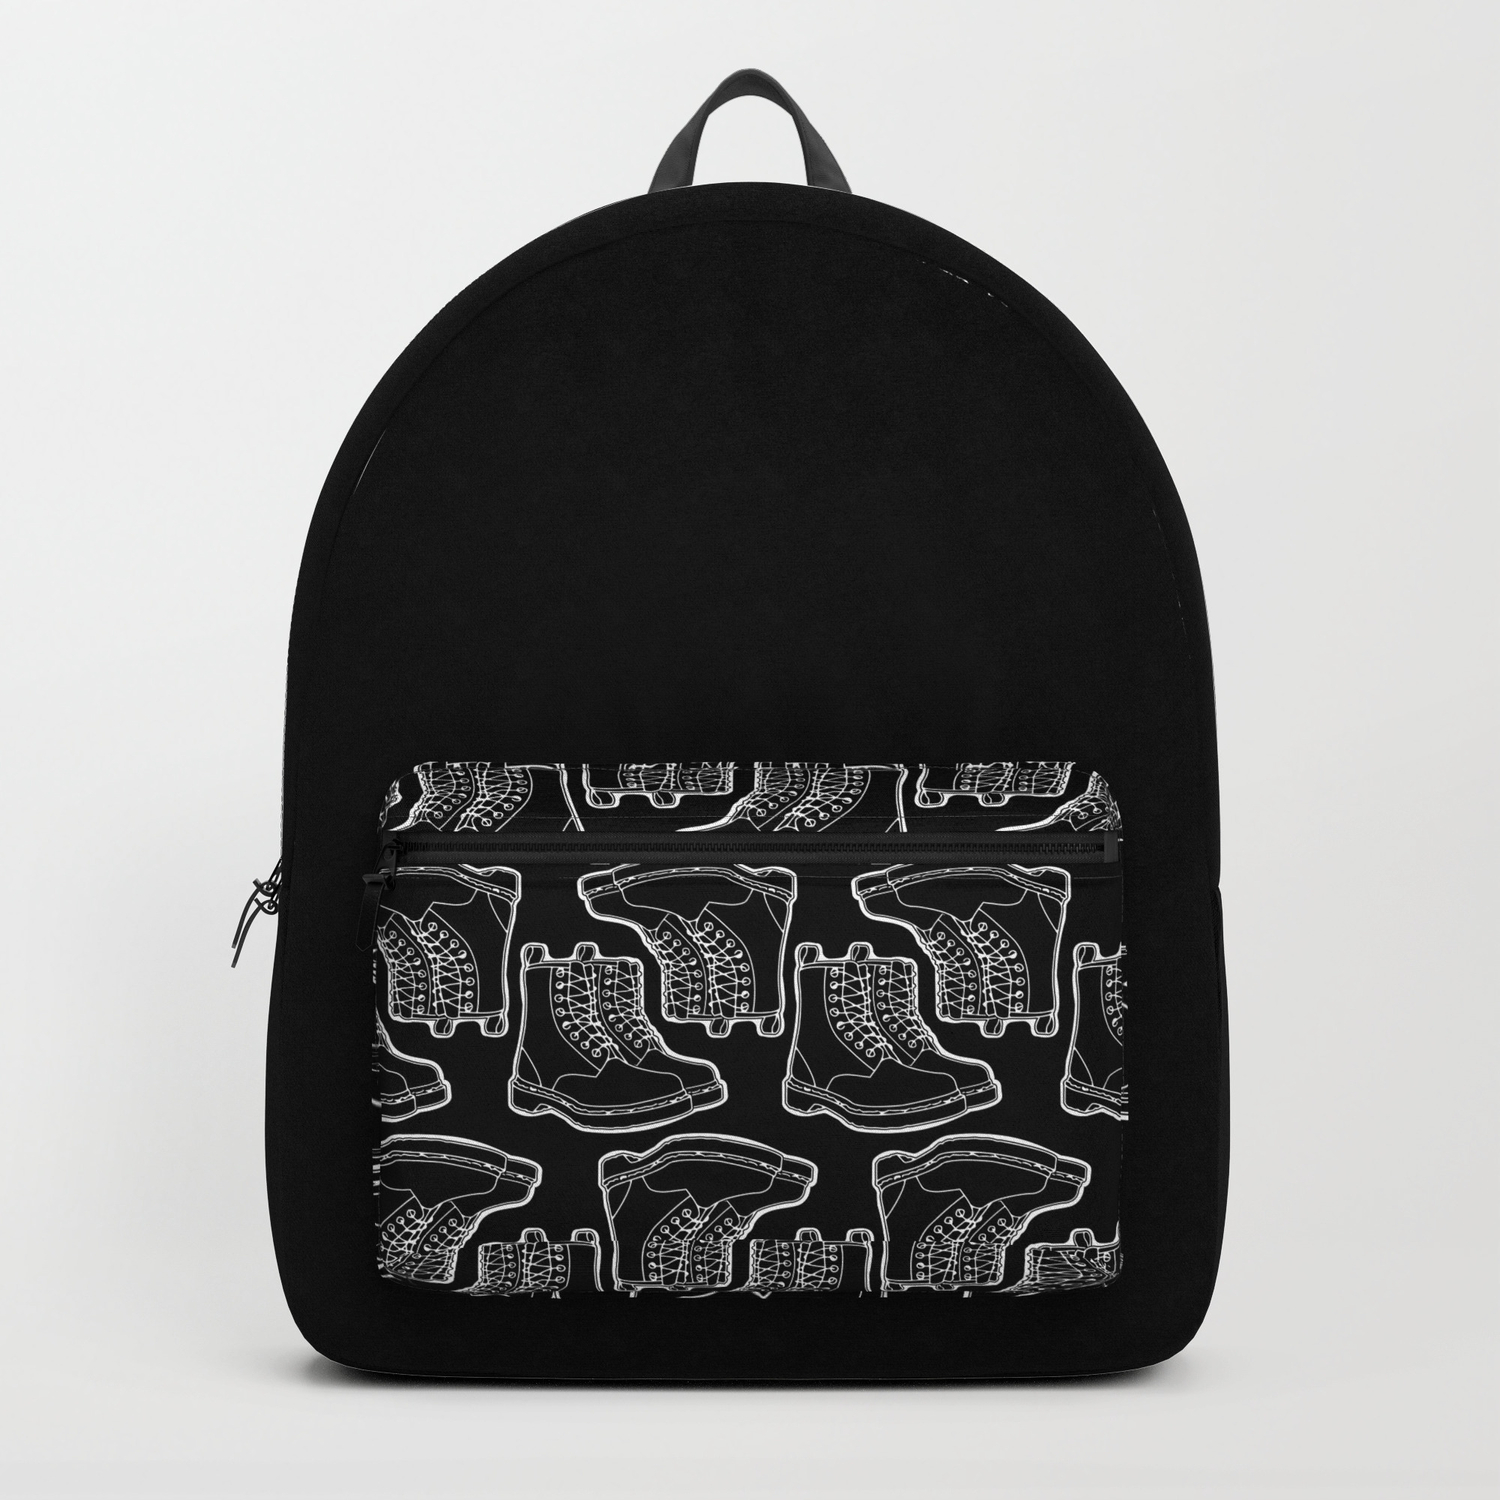 Backpack shutupbek | Society6